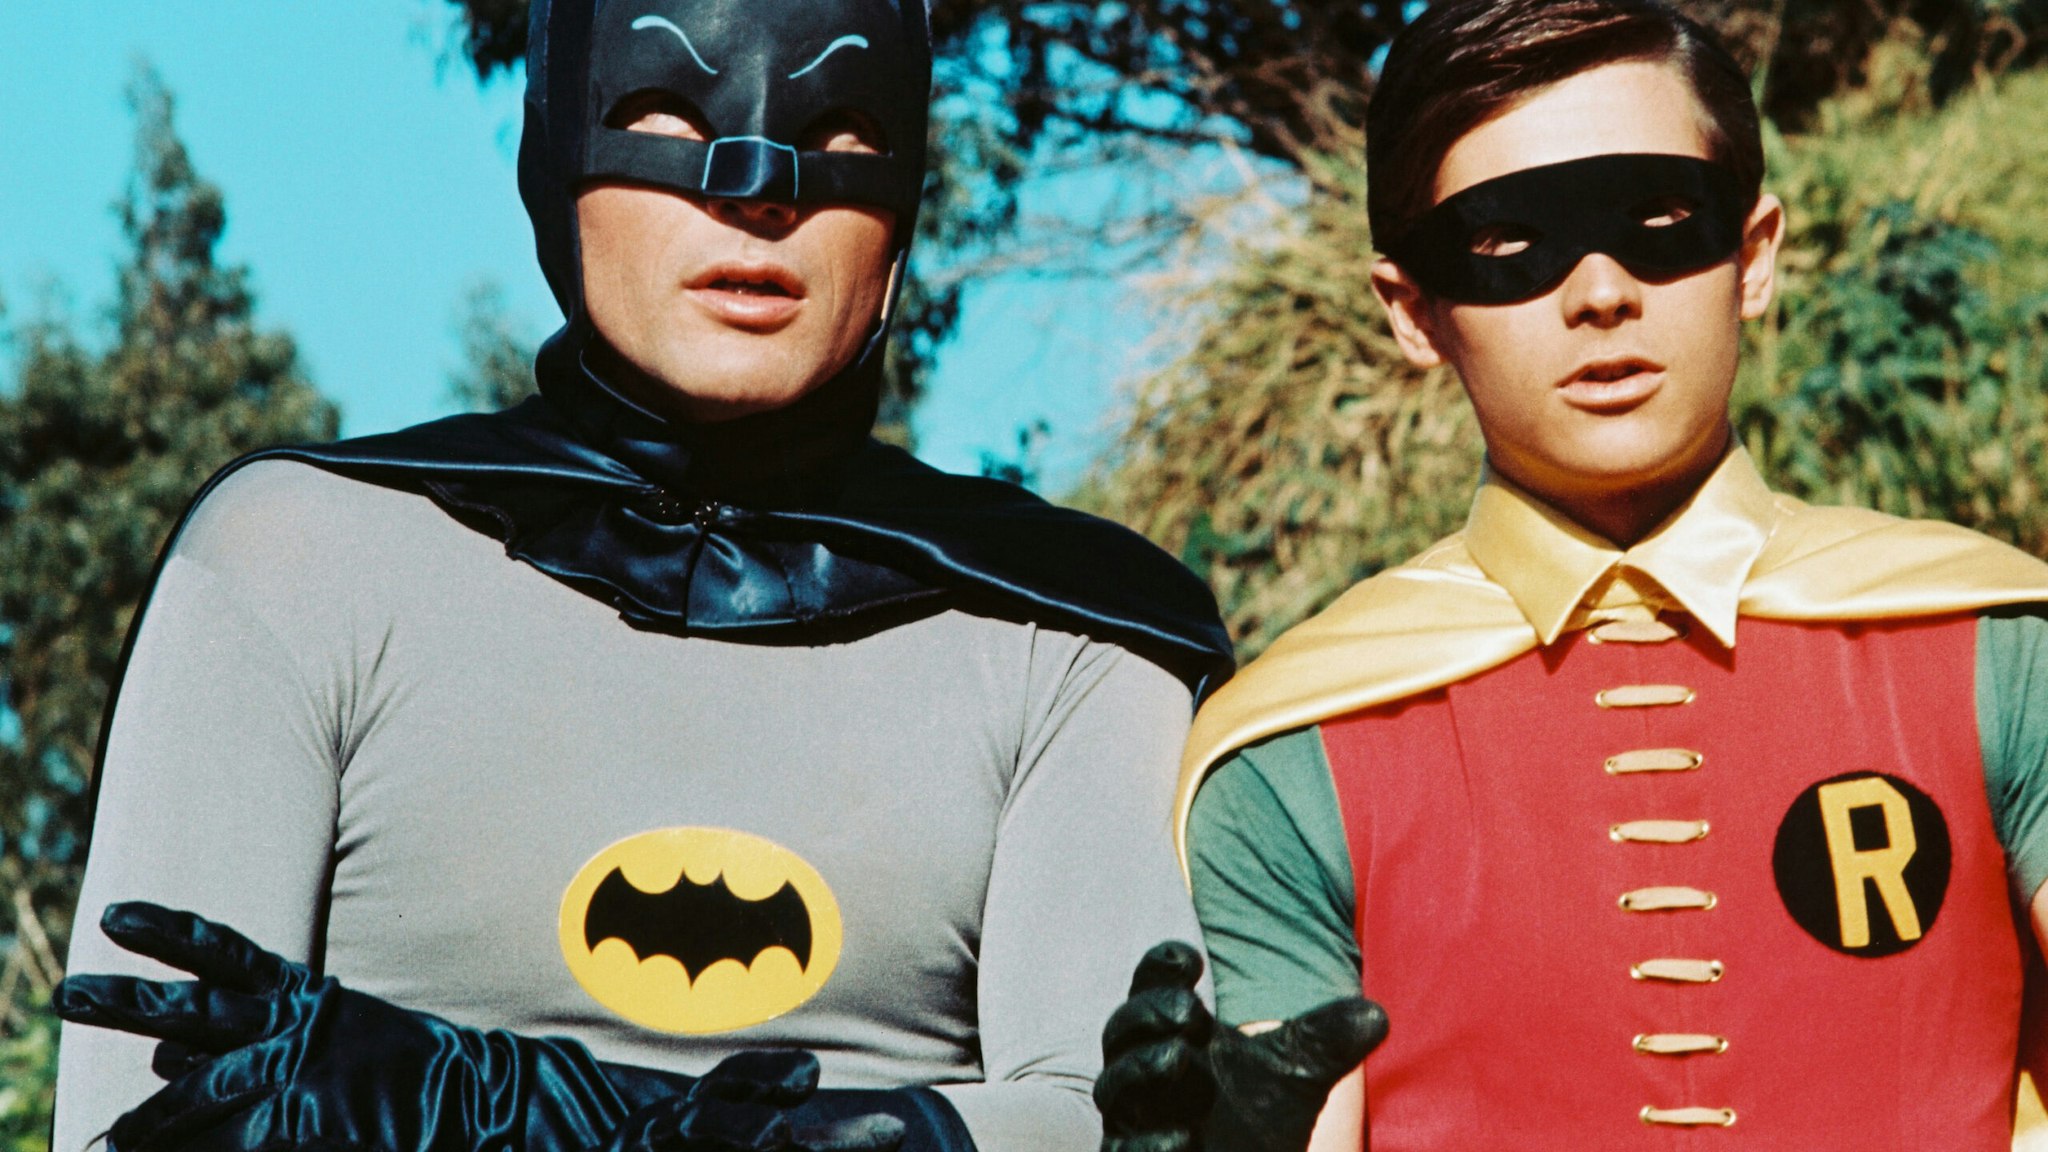 American actors Adam West as Bruce Wayne/Batman and Burt Ward as Dick Grayson/Robin in the TV series 'Batman', circa 1966.